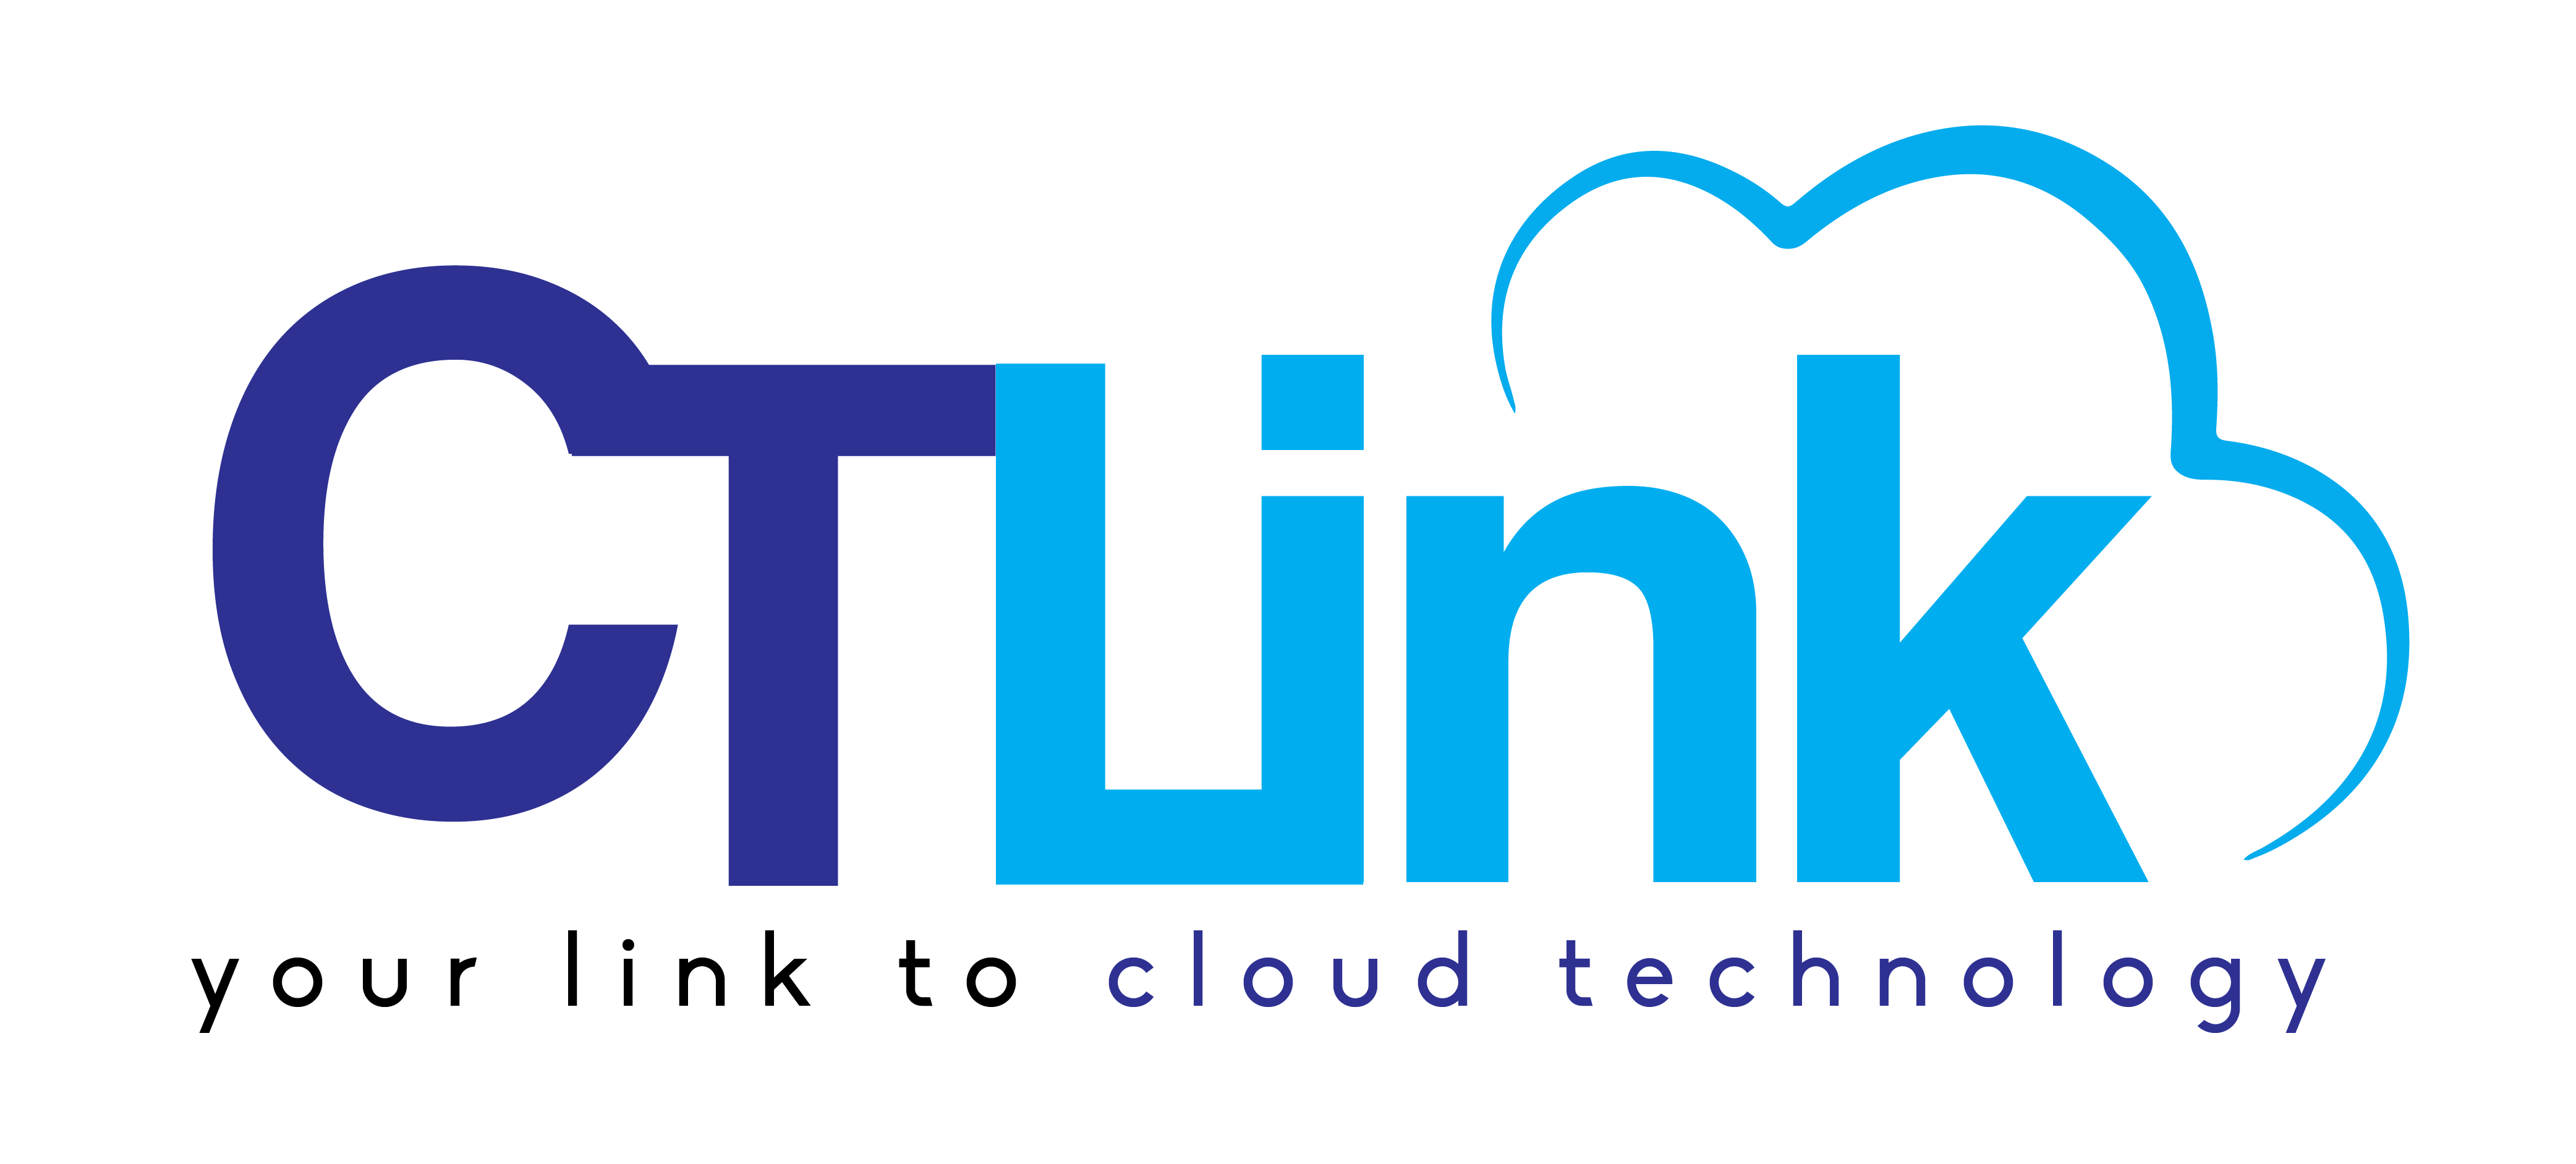 Cloud Company Logo - CT Link launches a new Company Logo